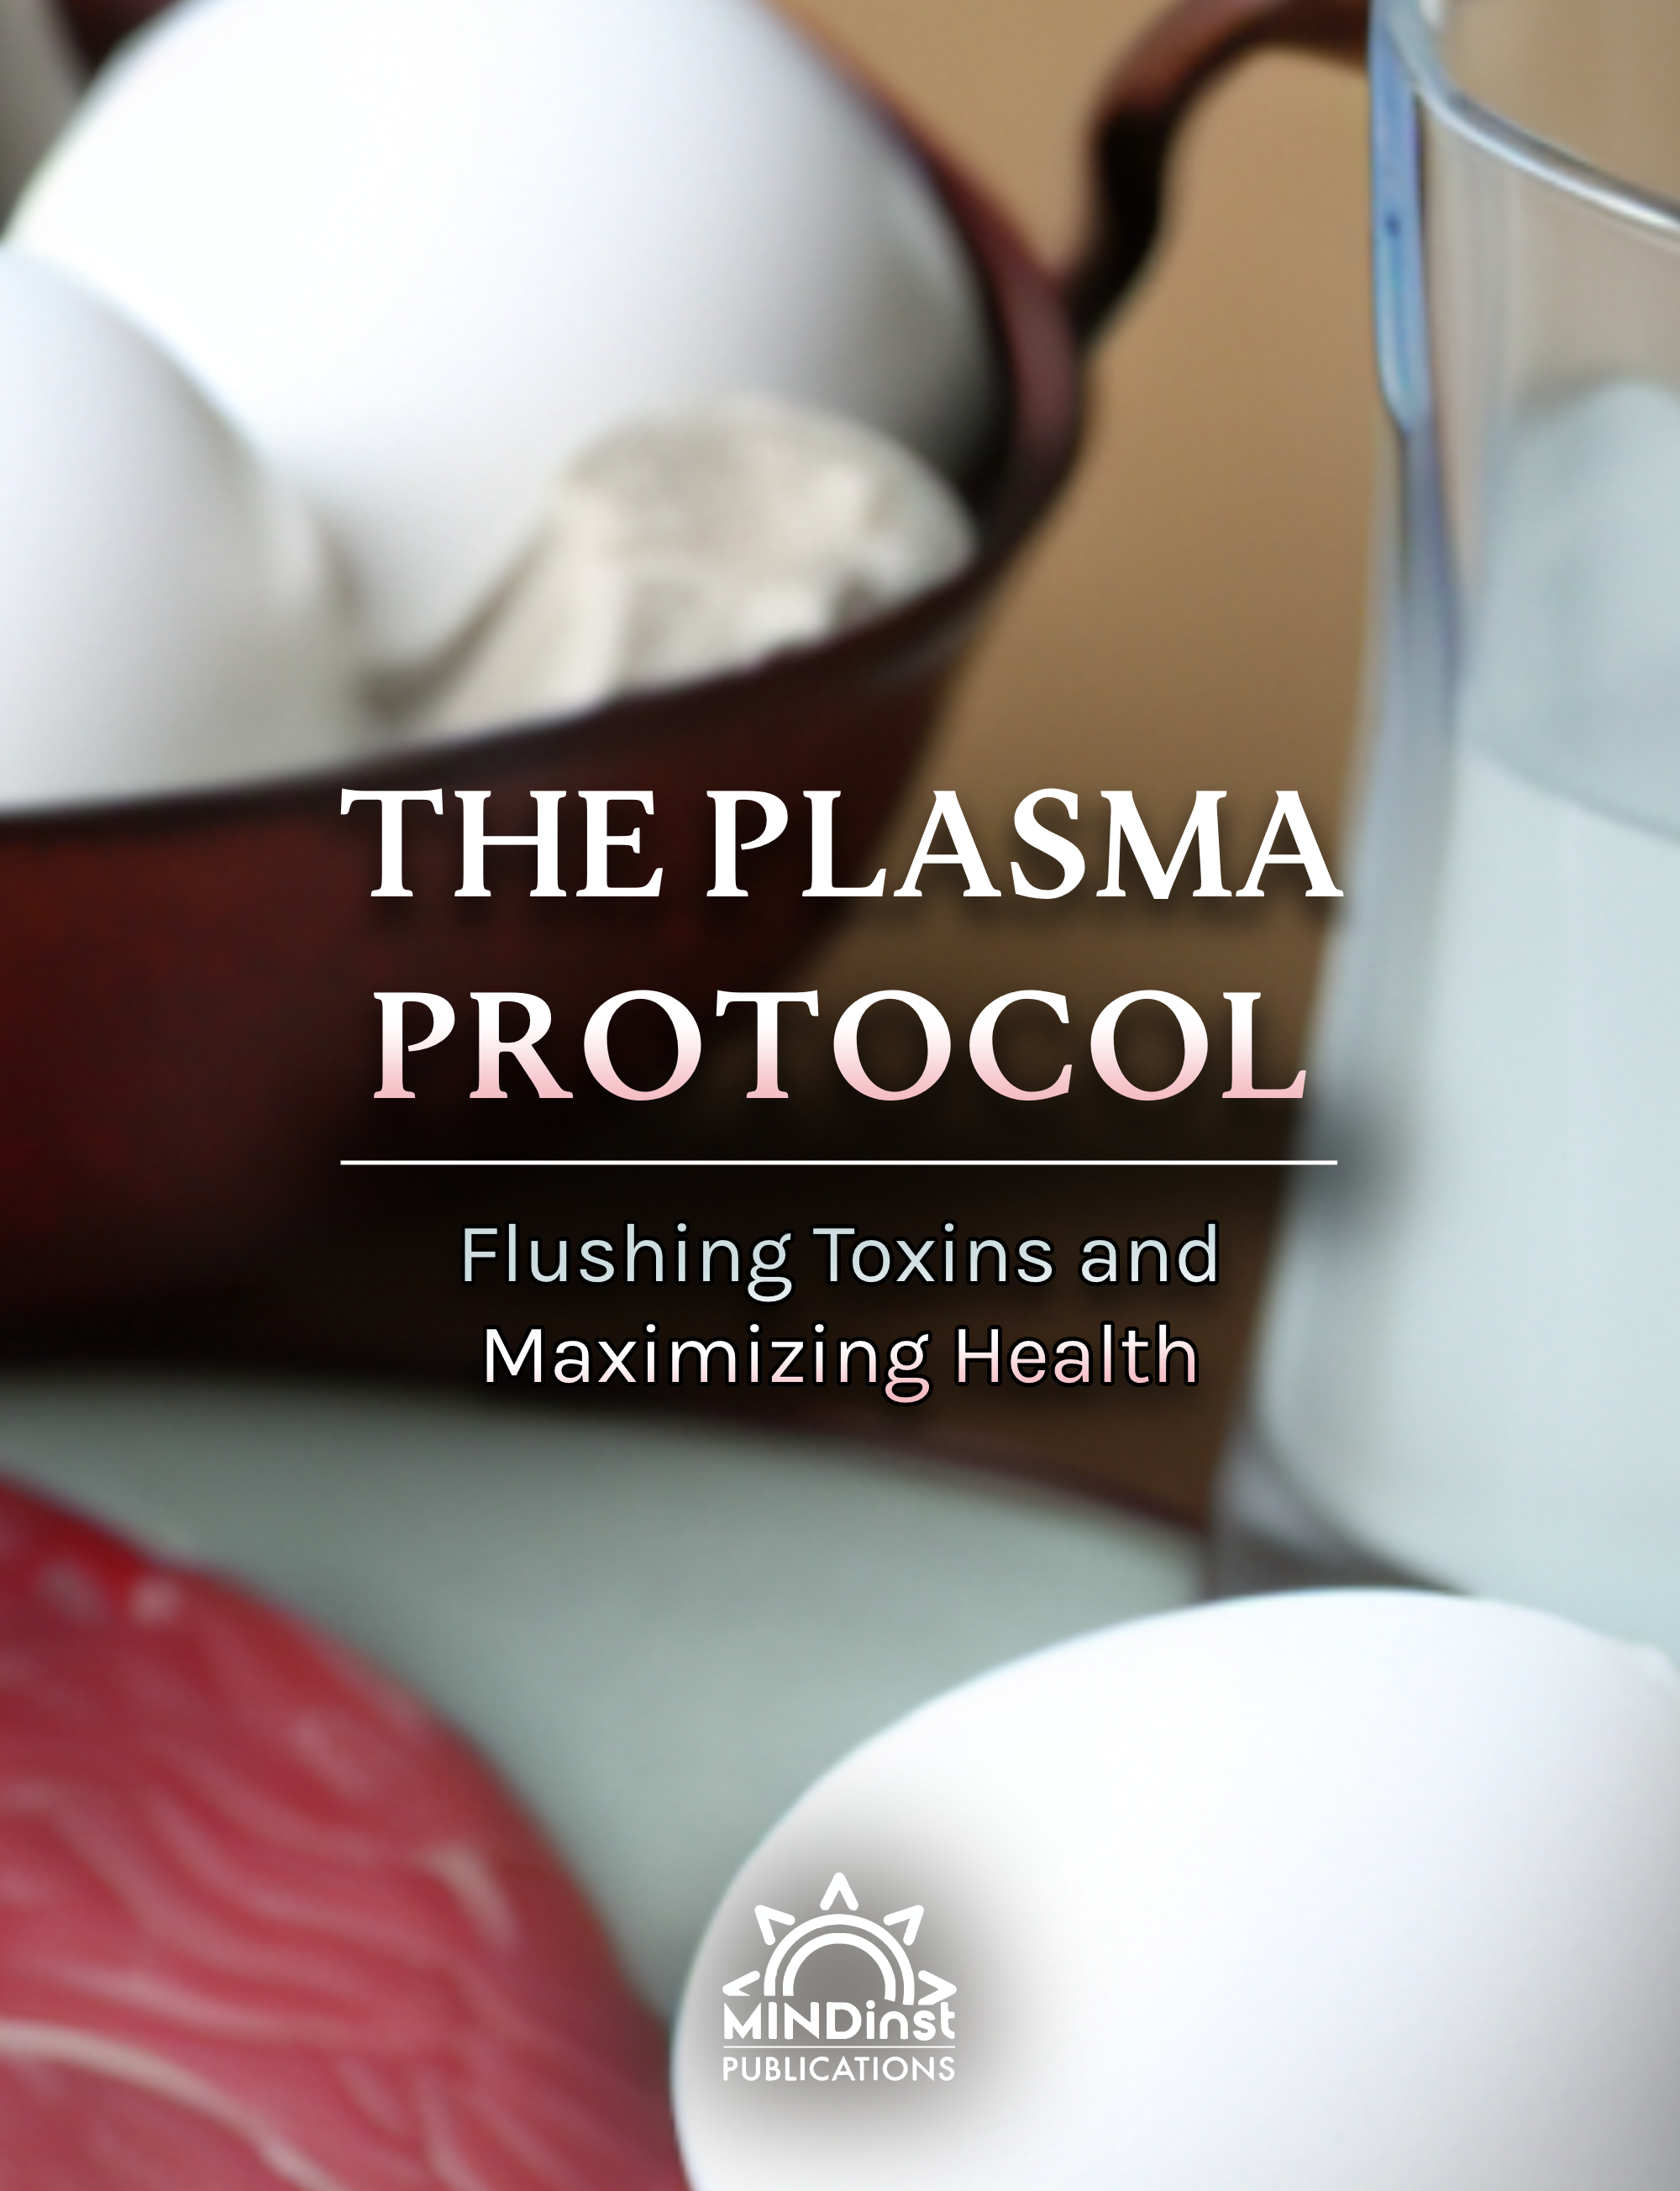       <h1>The Plasma Protocol: Flushing Toxins and Maximizing Health</h1>
